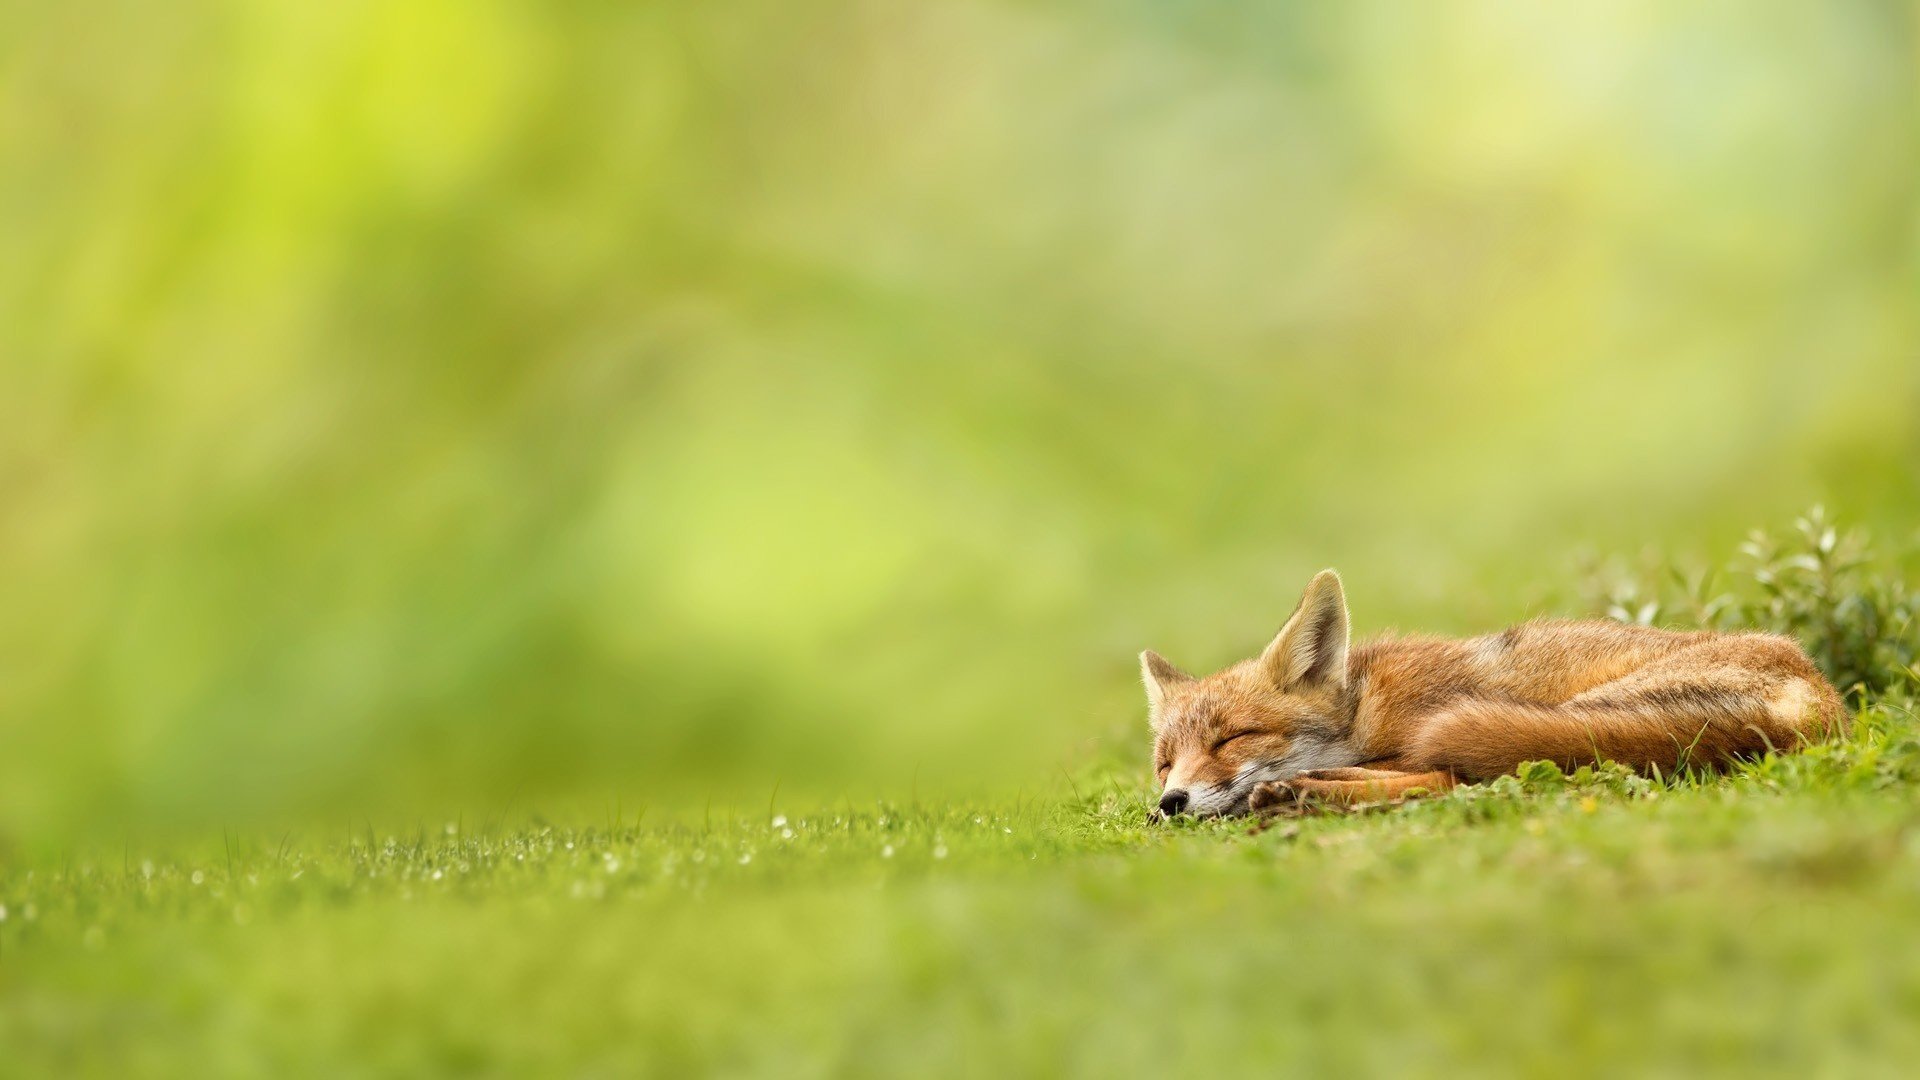 Рыжая лисица спит на зелёной траве